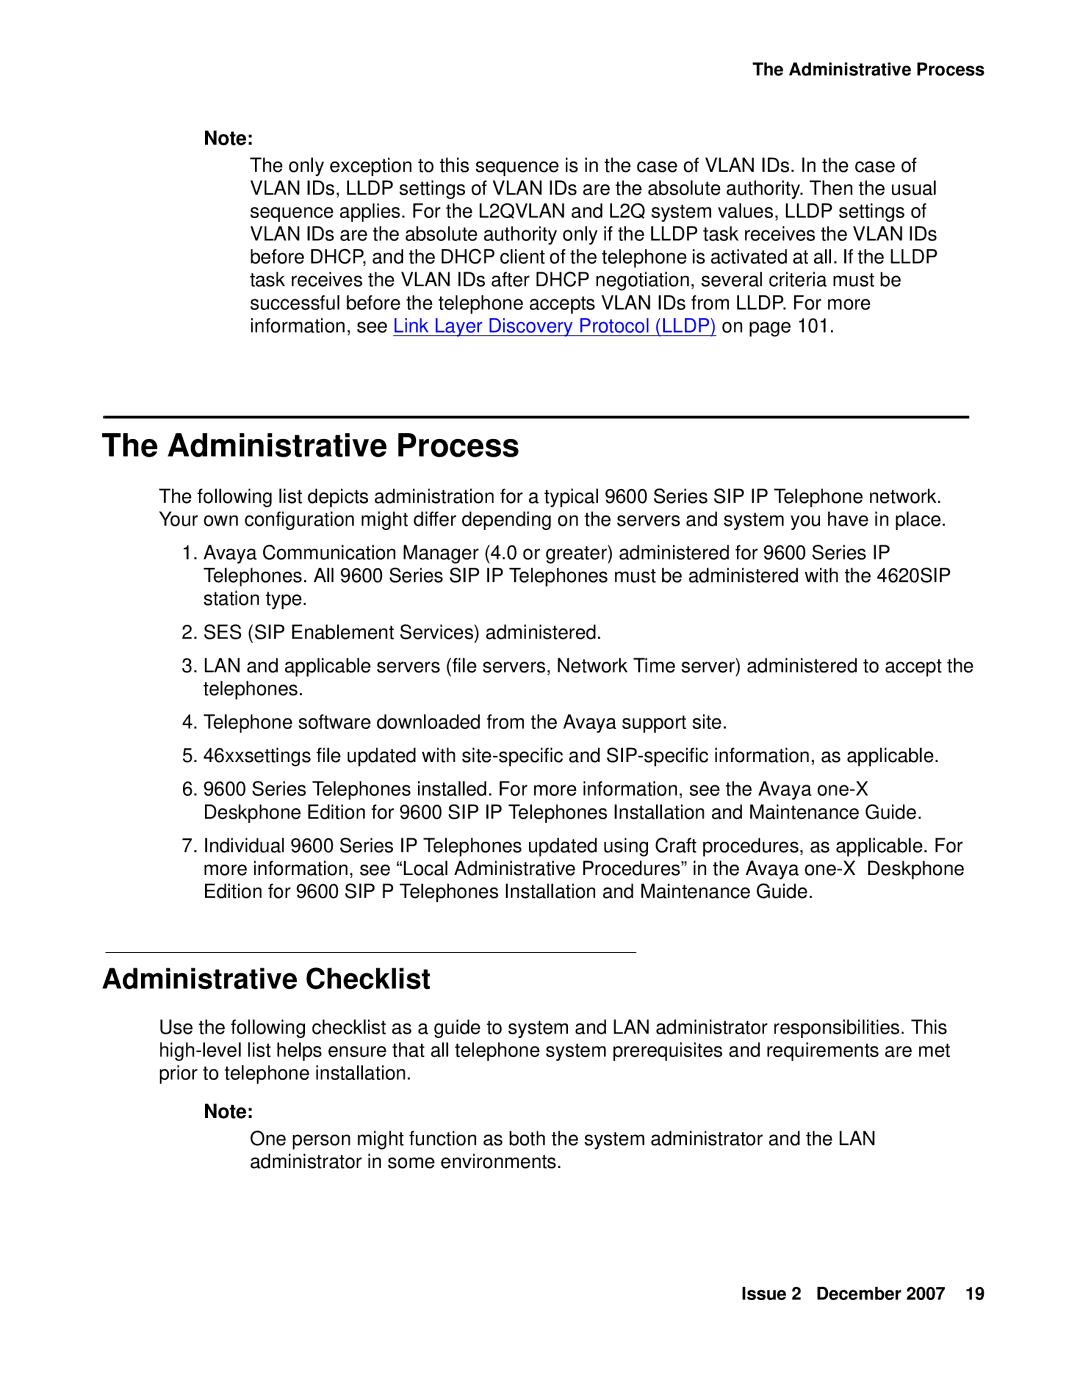 Avaya 9600 manual Administrative Process, Administrative Checklist 